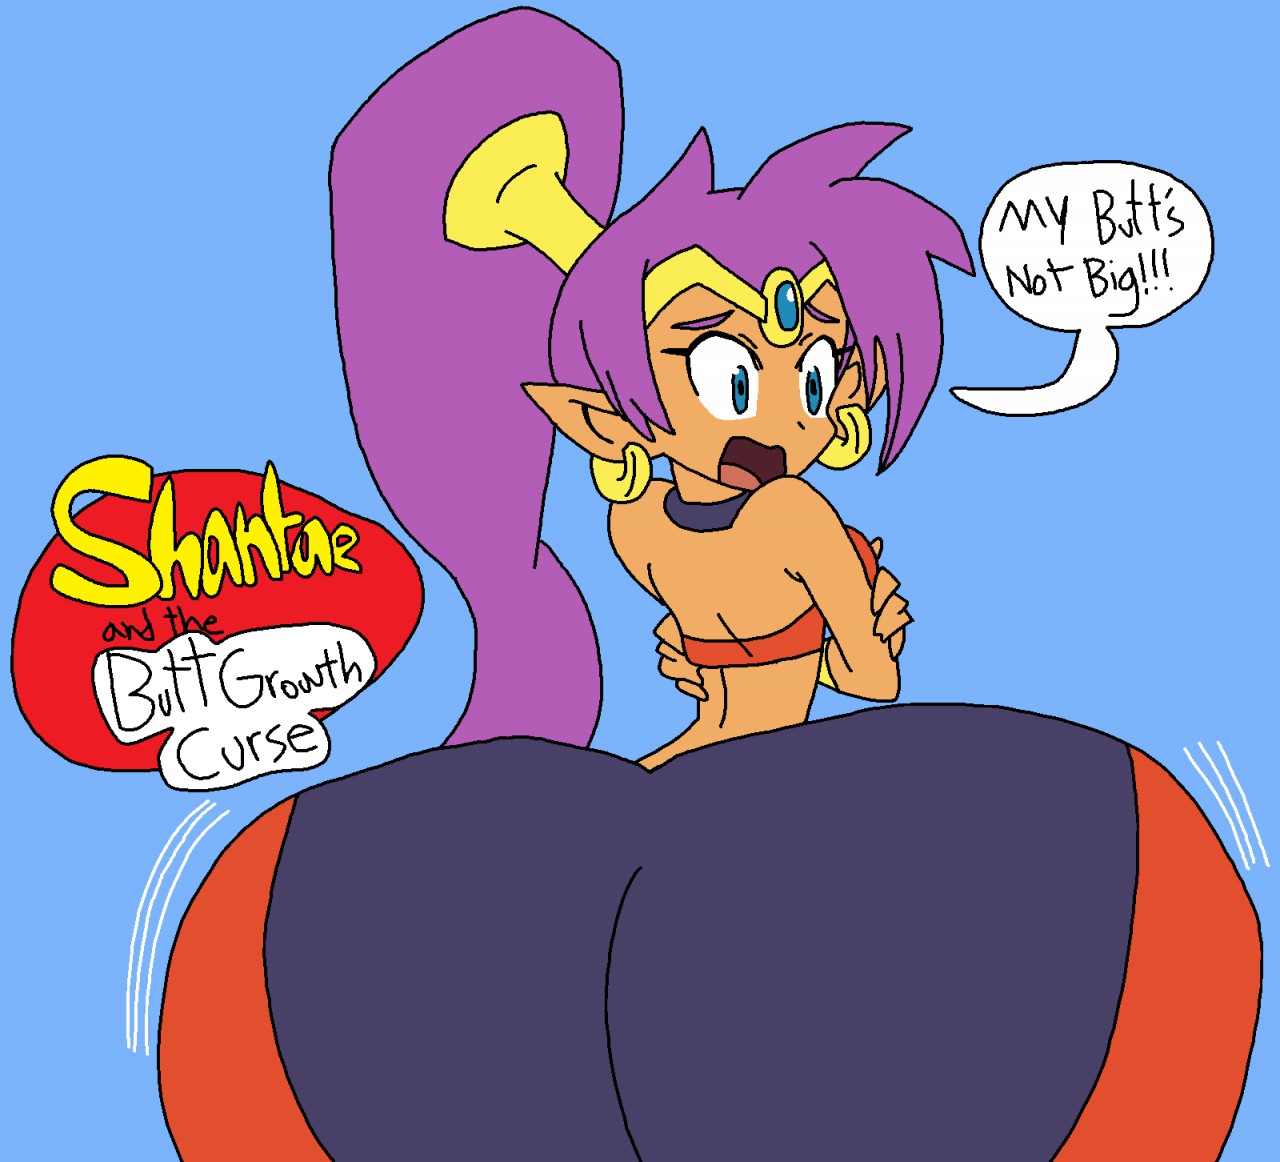 Shantae And The Butt Growth Curse Bigger Version. 